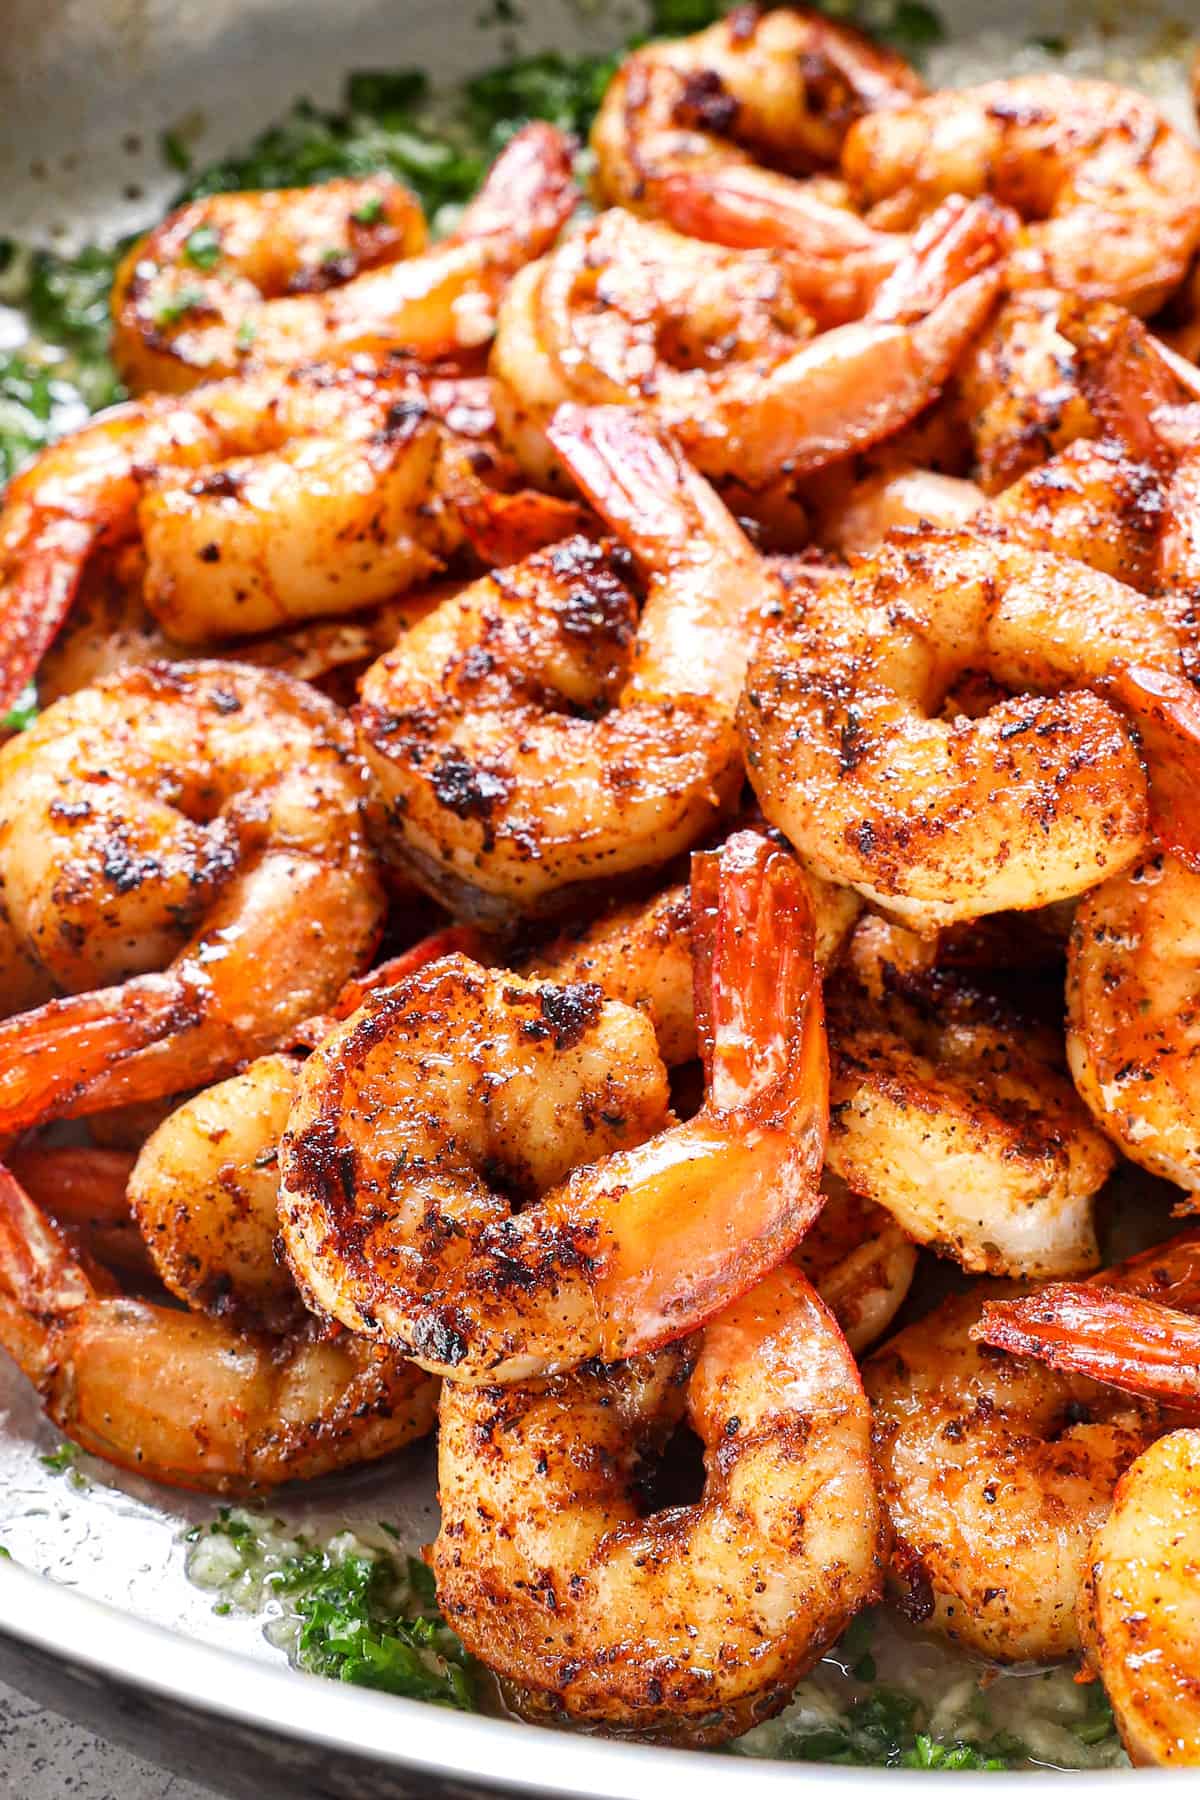 up close of Cajun shrimp showing how juicy it is